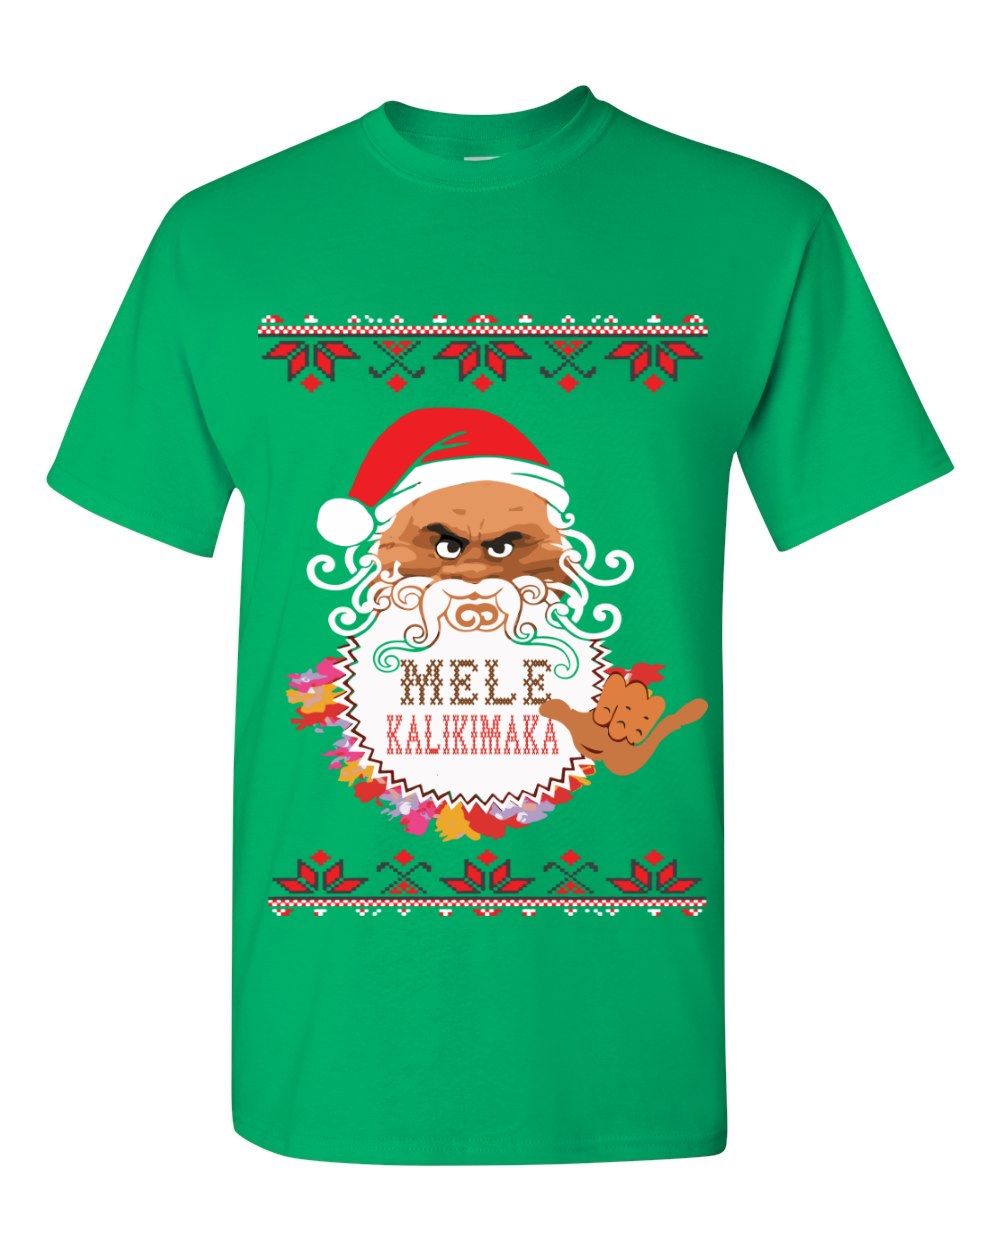 BORD Apparel Santa Mele Kalikimaka Ugly Christmas T-shirt